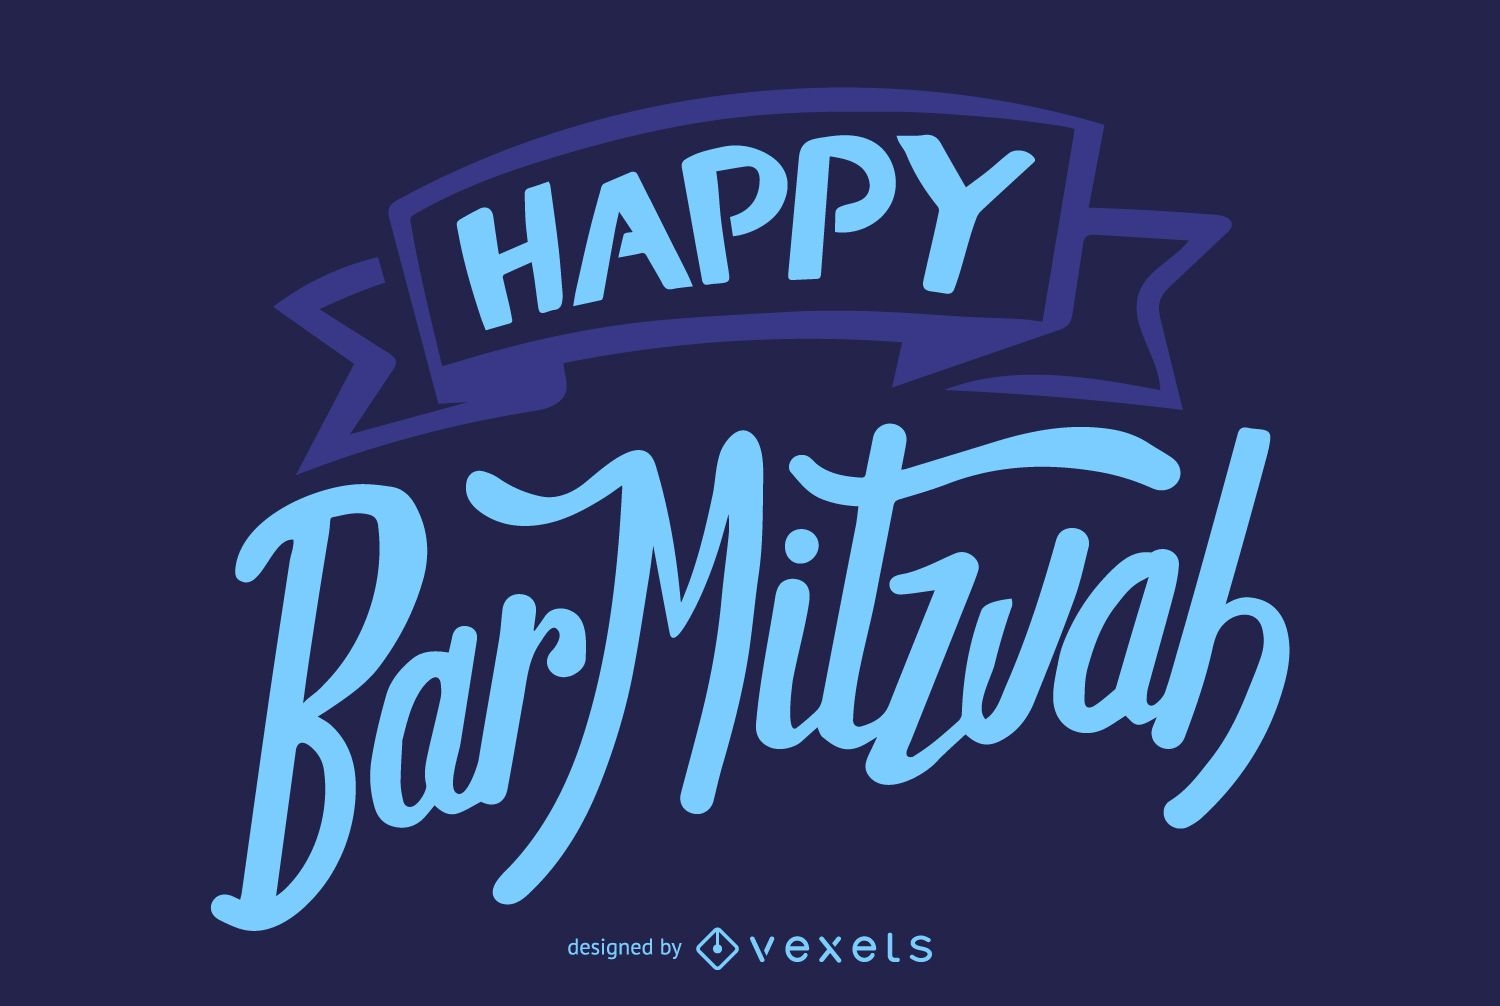 Happy Bar Mizwa Schriftzug